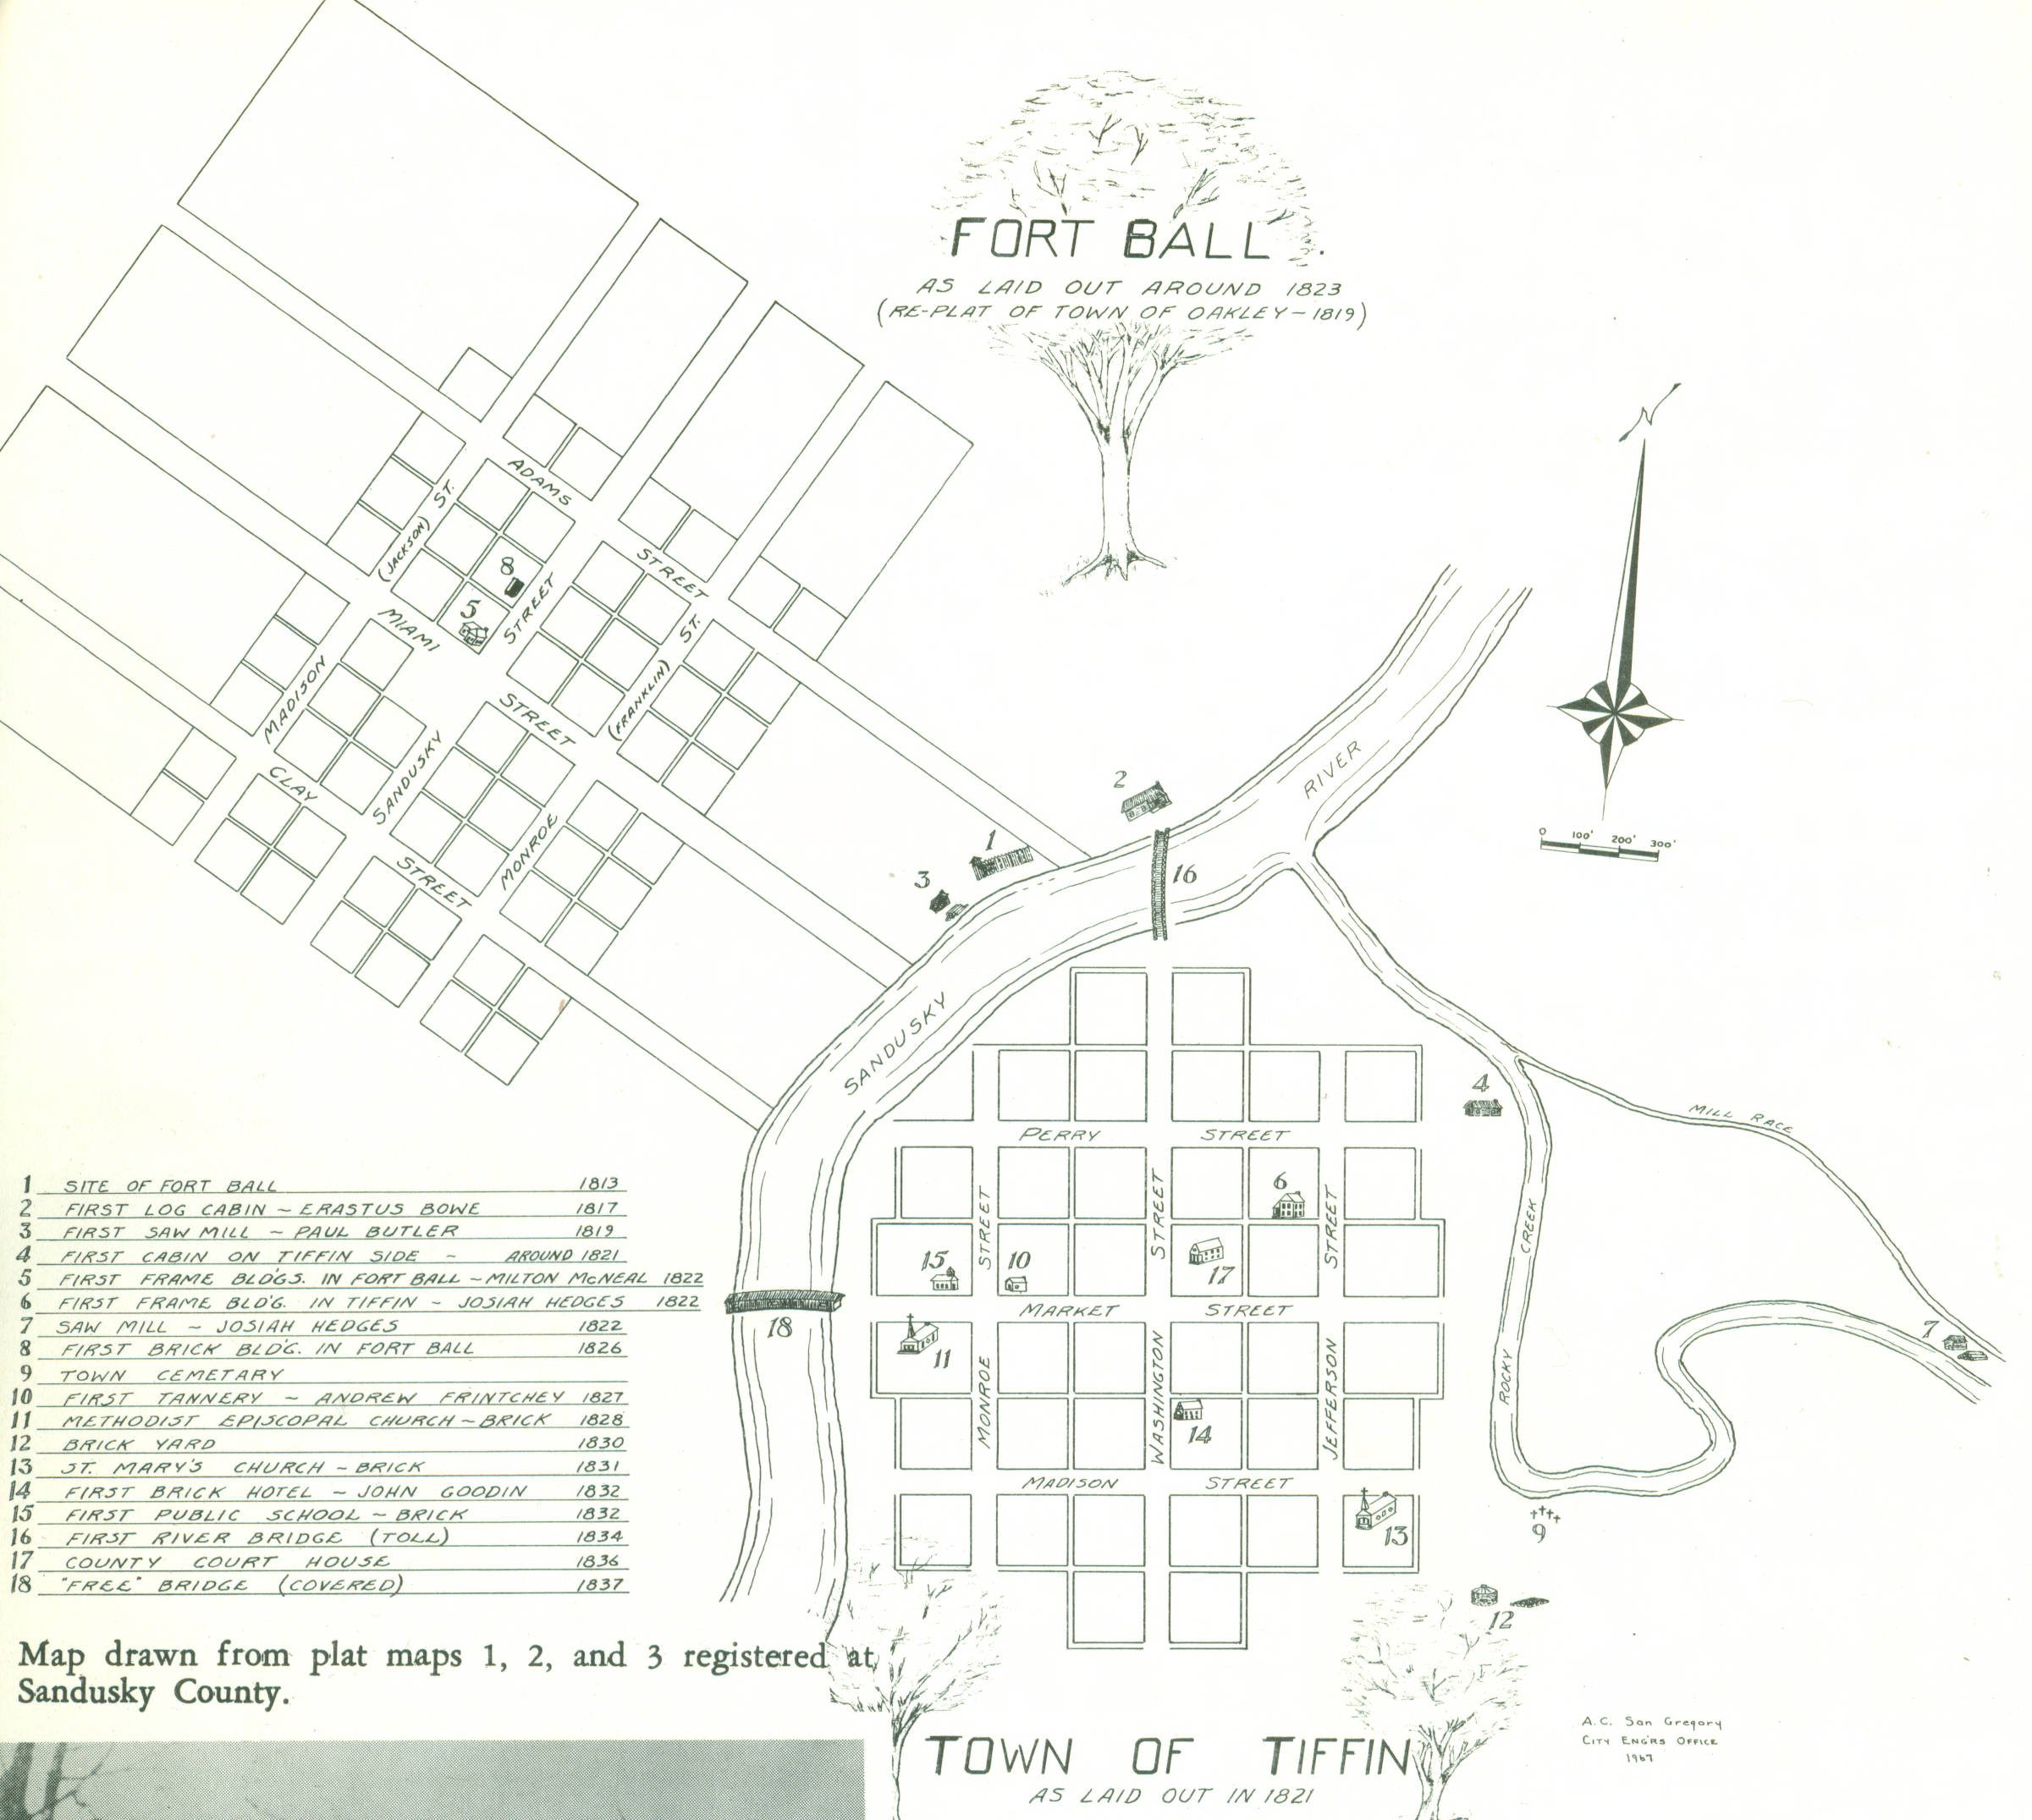 Index of property owners, real estate atlas of Cincinnati, Ohio. V.01 -  Maps & Atlases - Digital Library